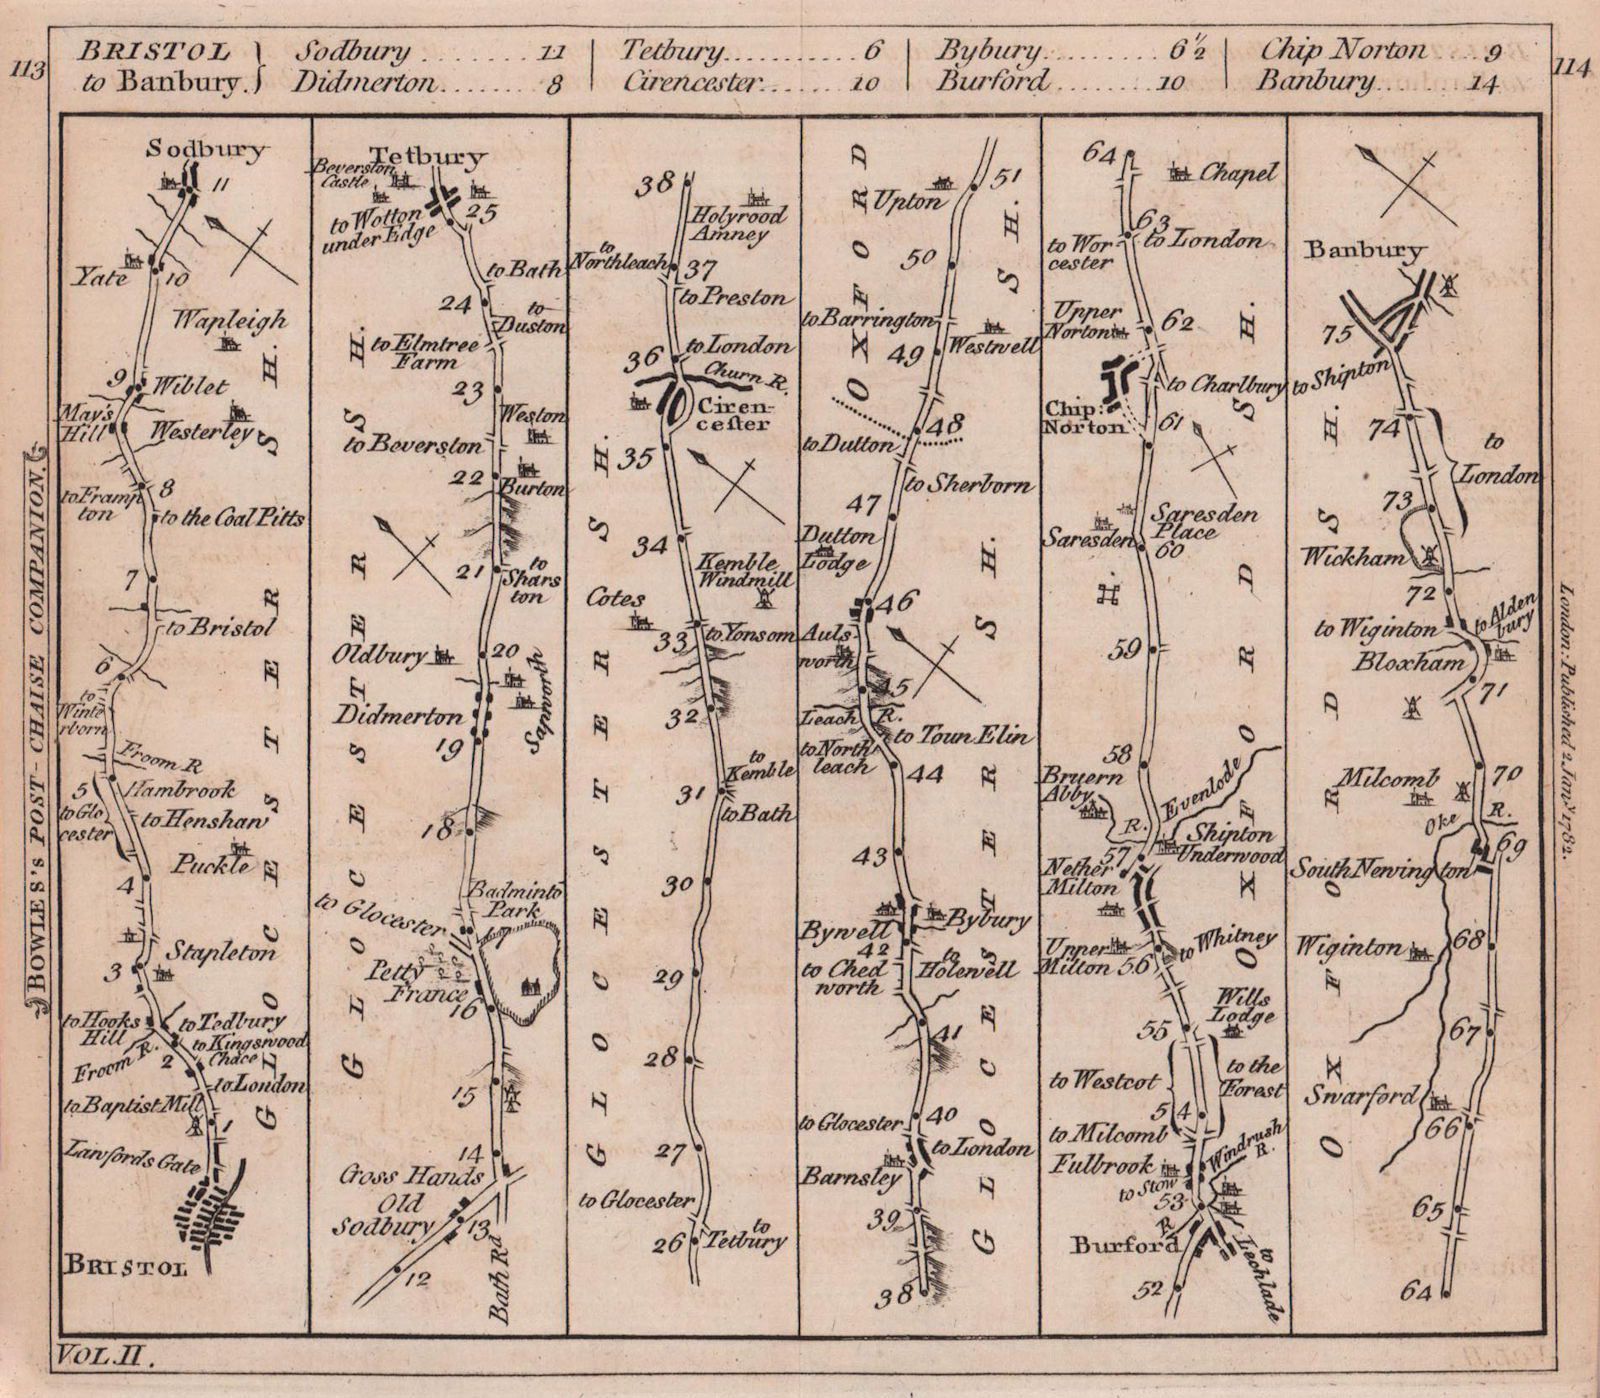 Associate Product Bristol-Cirencester-Chipping Norton-Banbury road strip map. BOWLES 1782